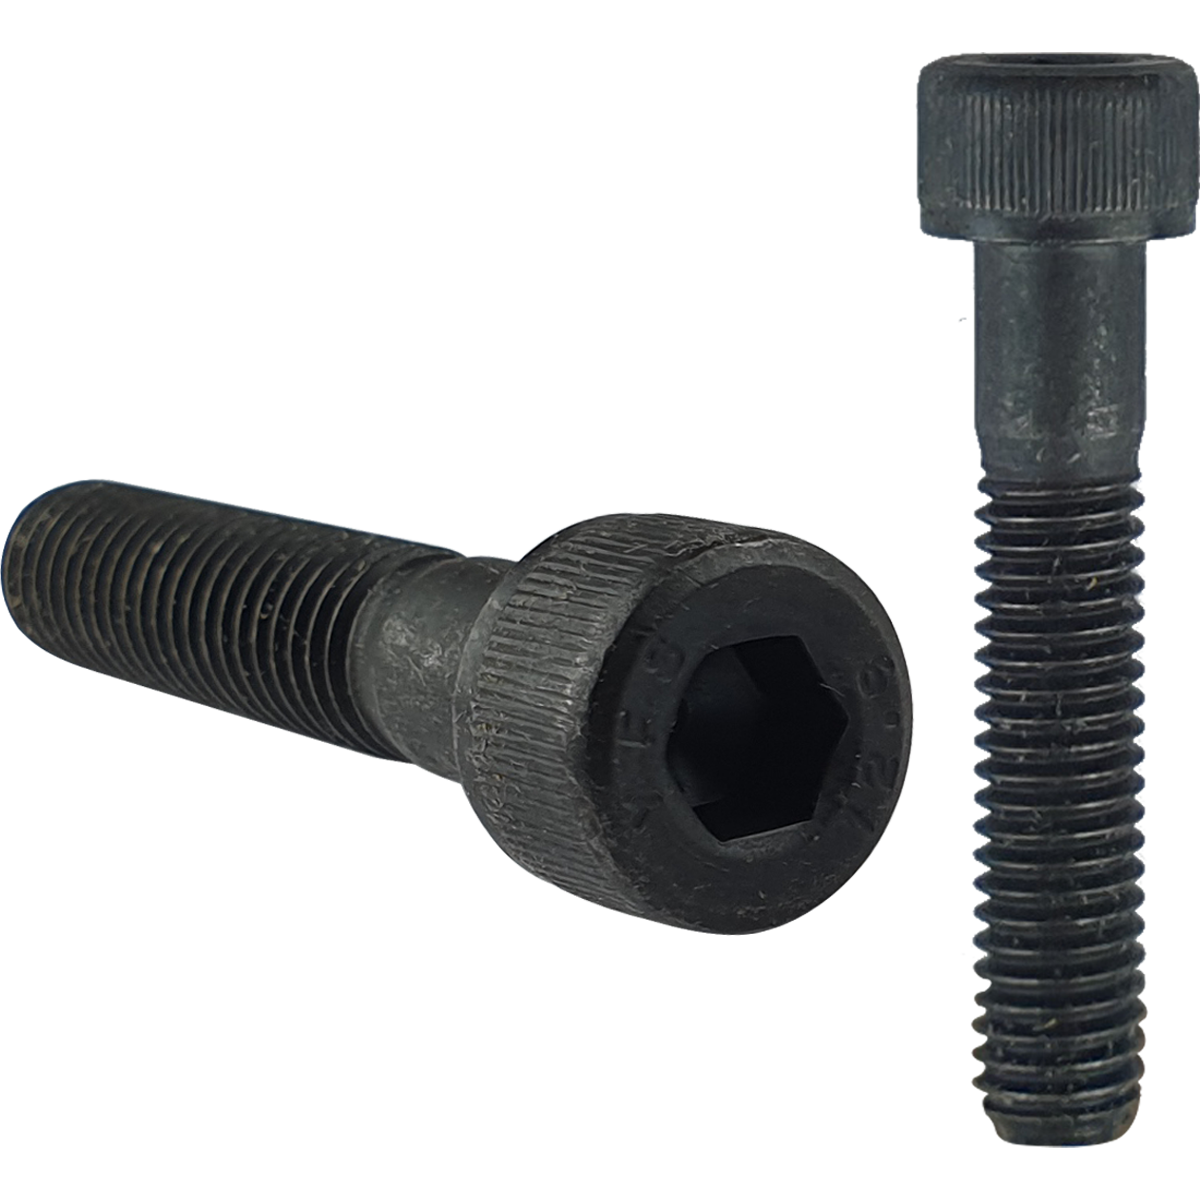 Self-colour, cap head screws with a hex socket recess. Also known as socket head screws and Allen key screws